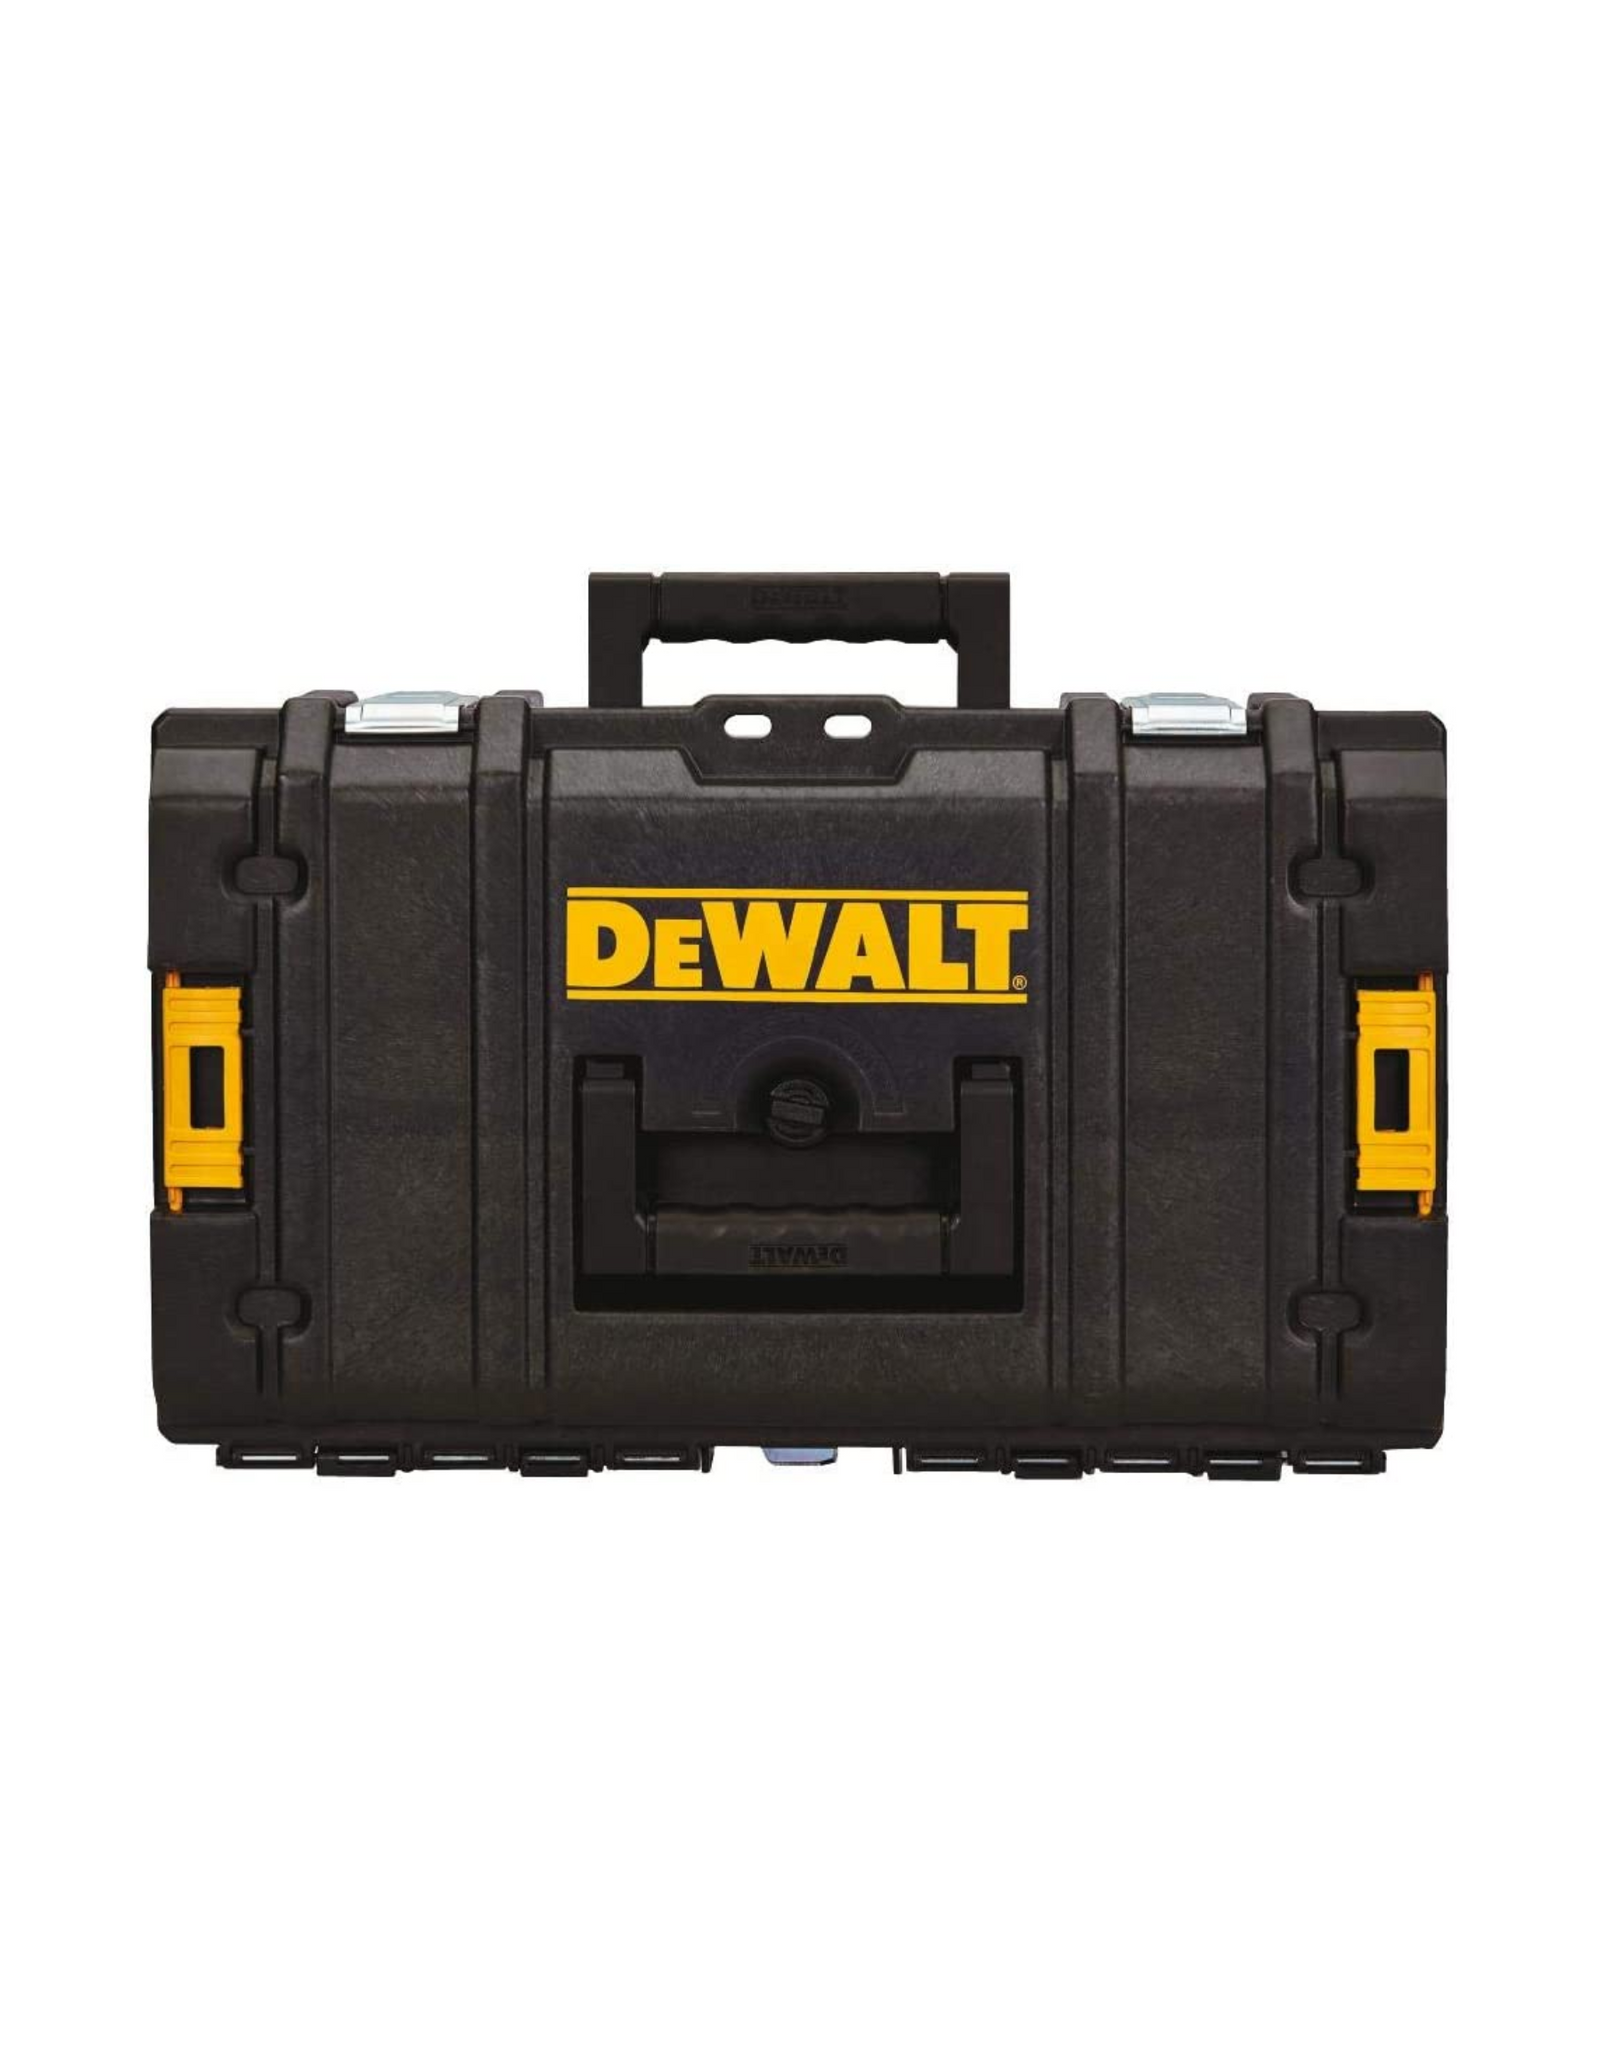 DEWALT Tough System Tool Box (DWST08201), Small, Black